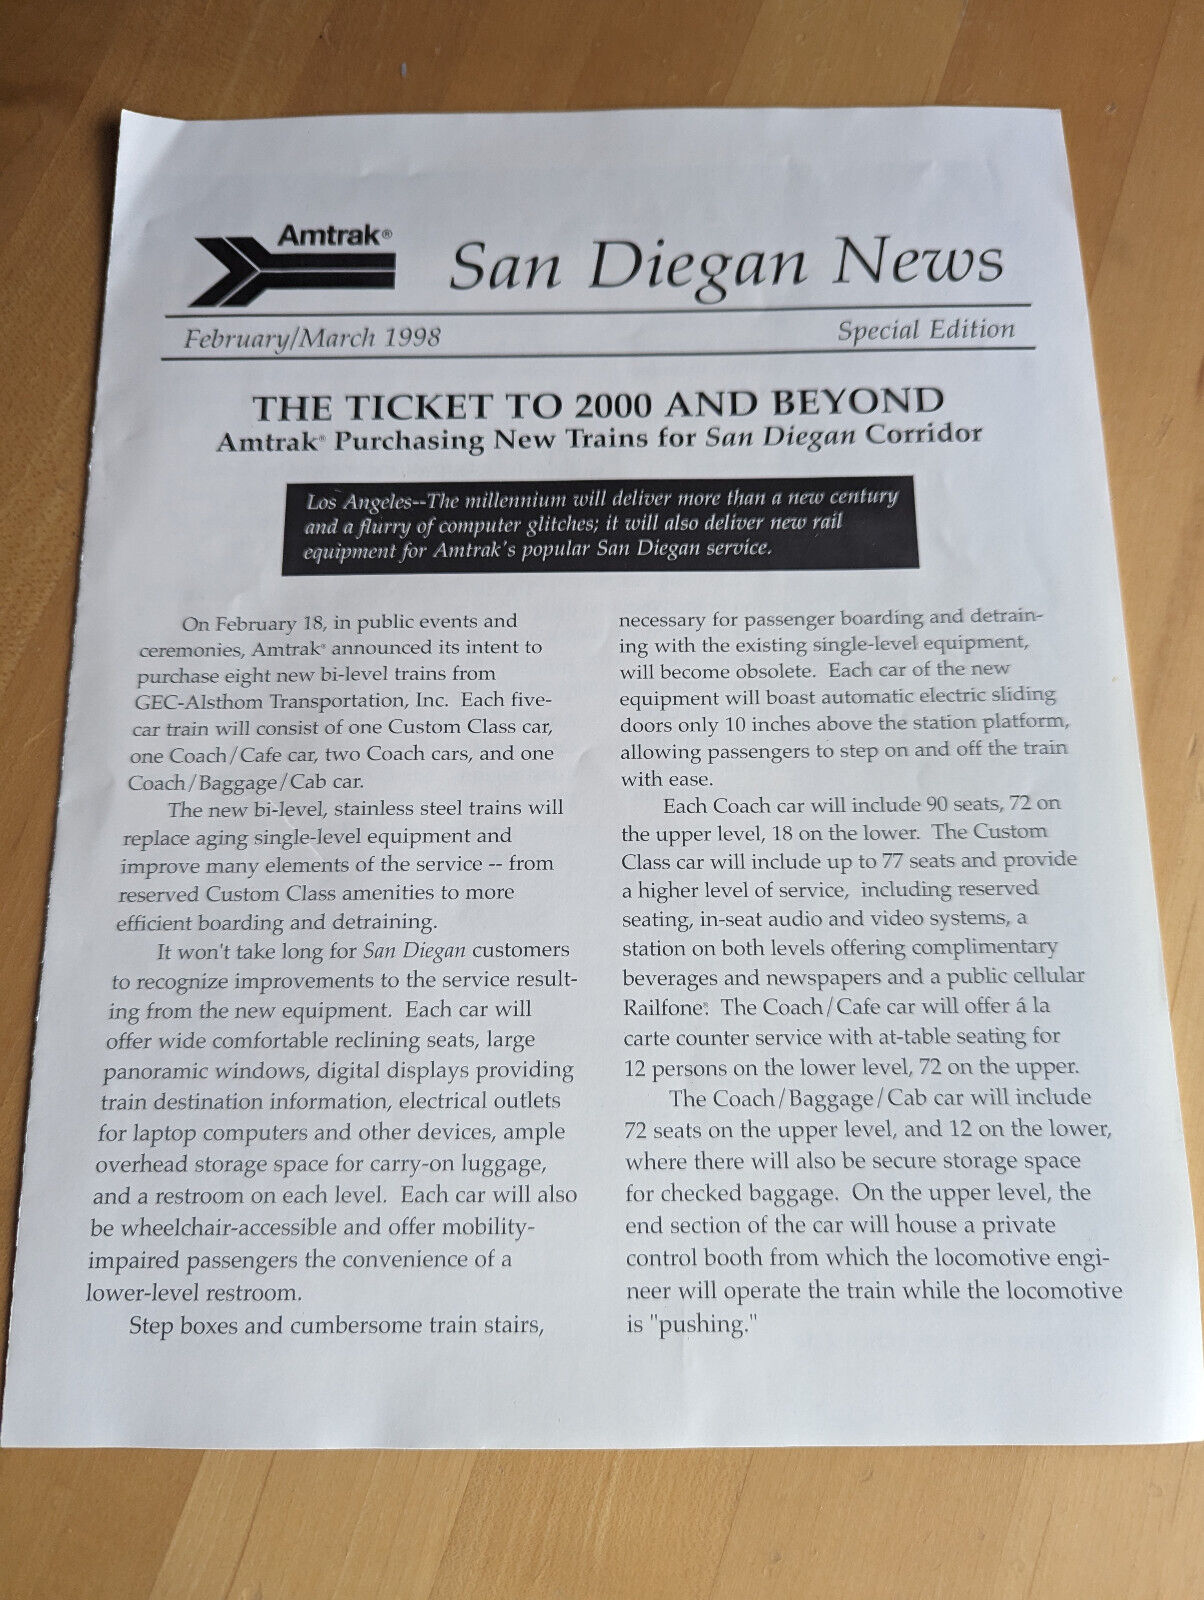 Amtrak onboard San Diegan News Feb/March 1998 Special Edition